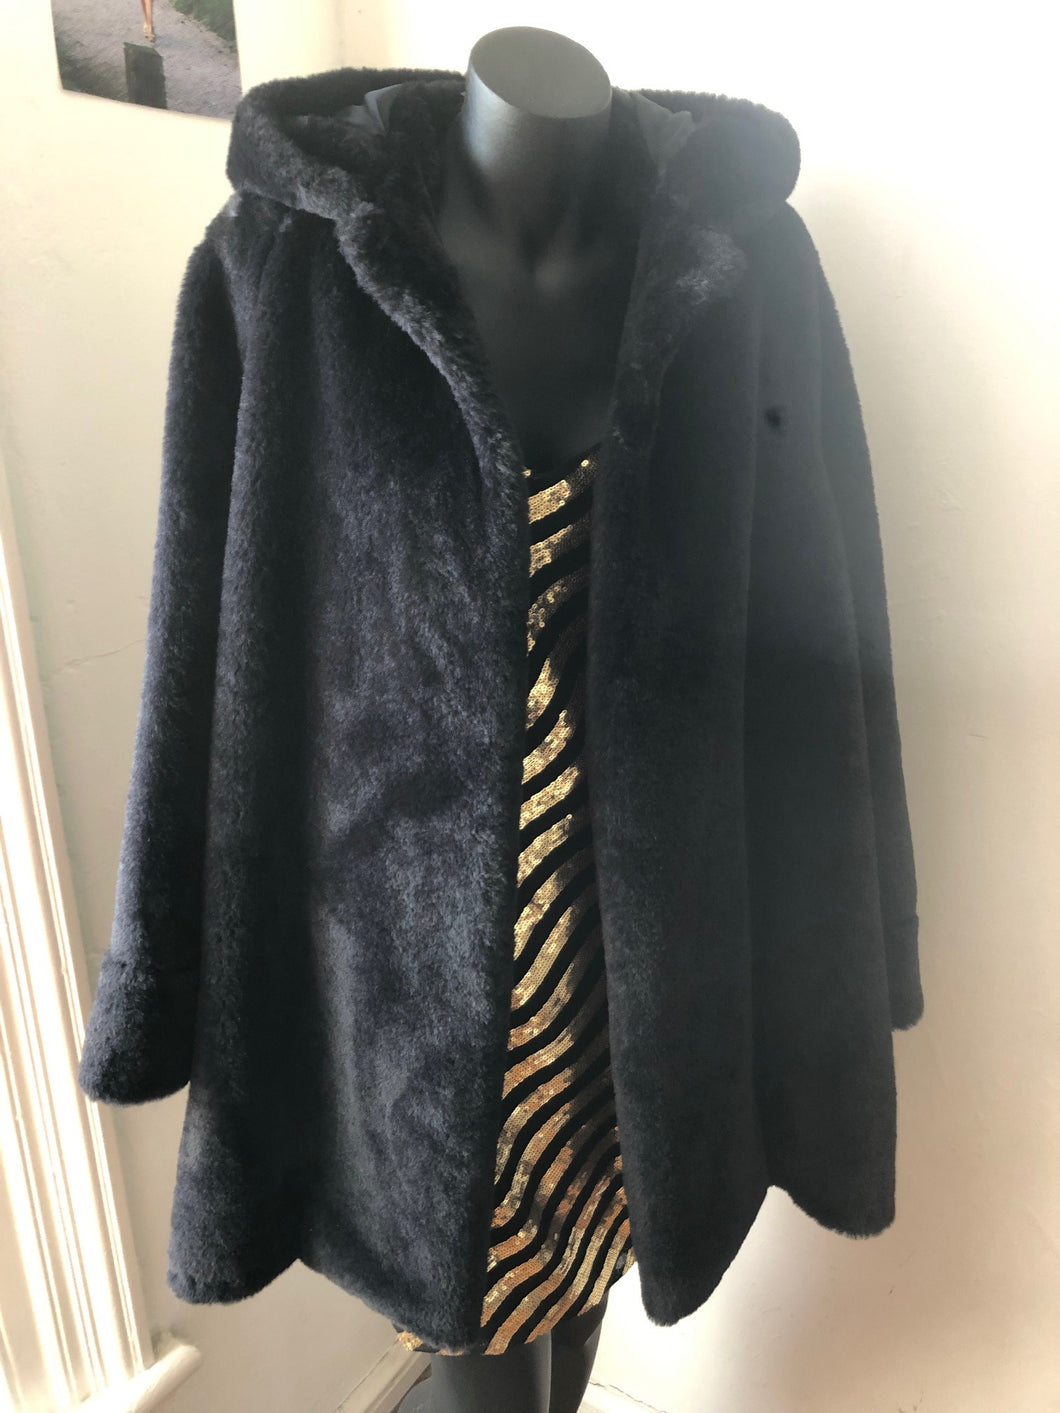 Chrystal Sloane Winter 2022 Black 3/4 Length Faux Fur Swing Coat with Hood.